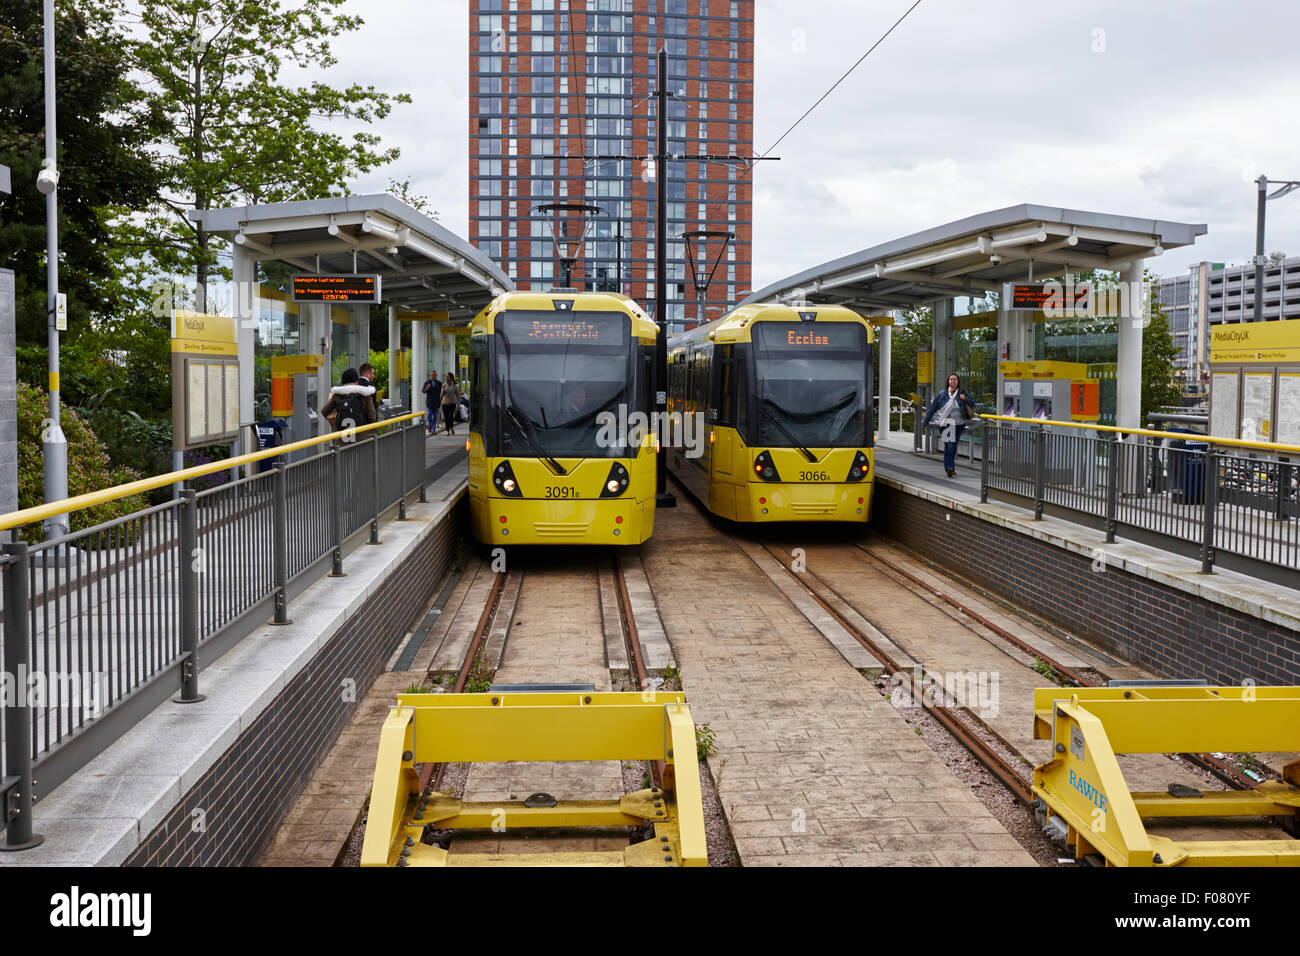 metrolink trams at mediacity station Manchester uk Stock Photo